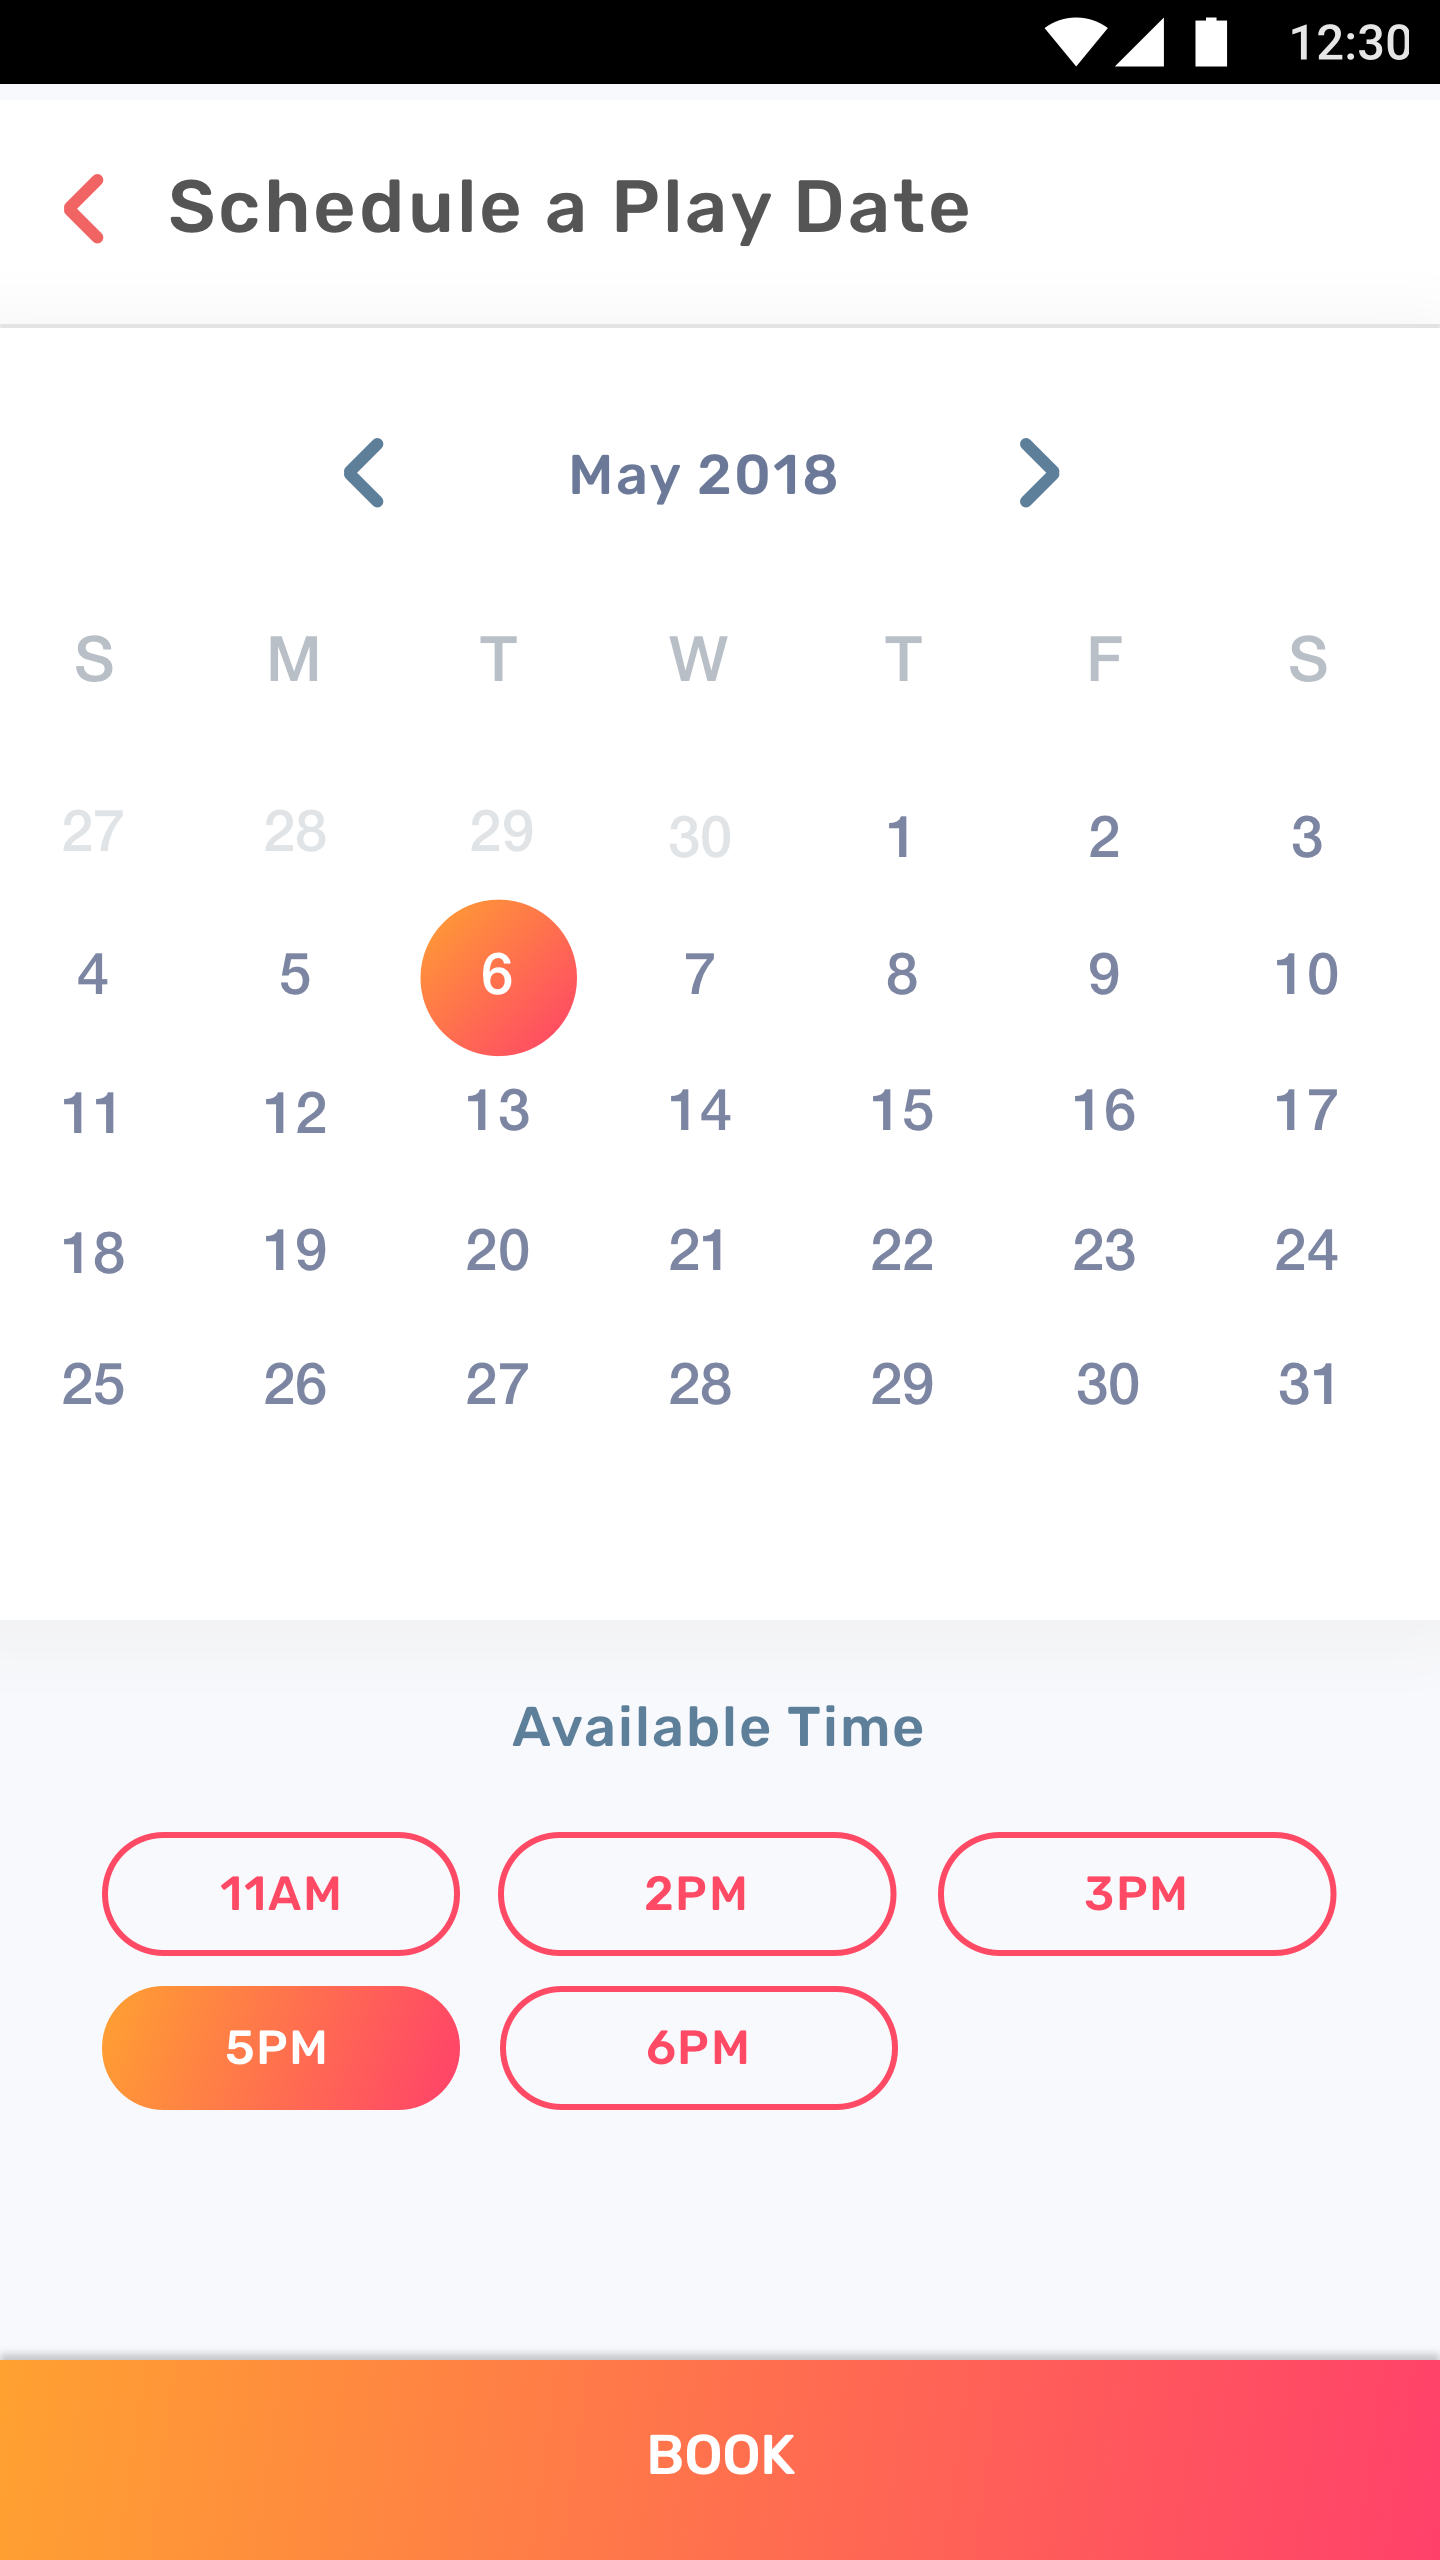 Schedule a Play Date - Calendar.png